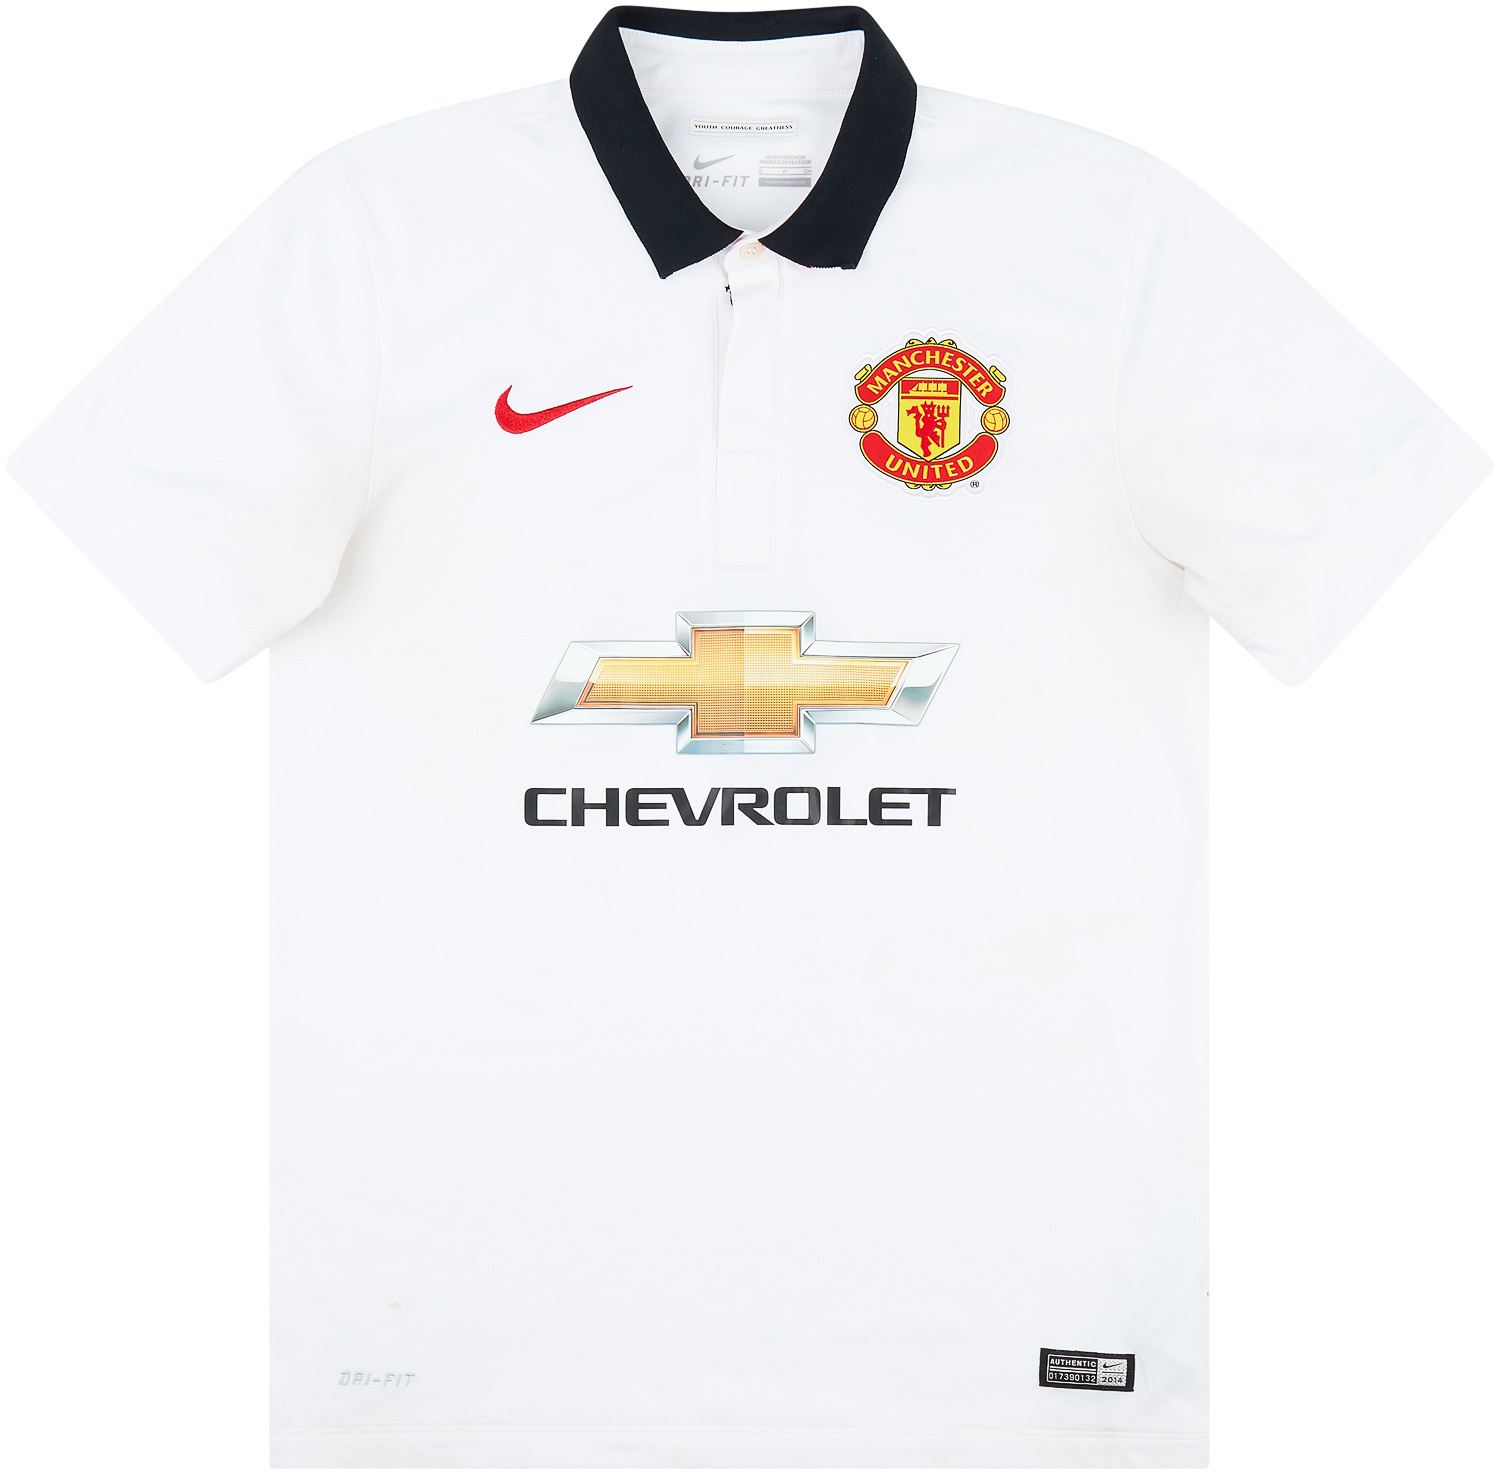 2014-15 Manchester United Away Shirt - 5/10 - ()